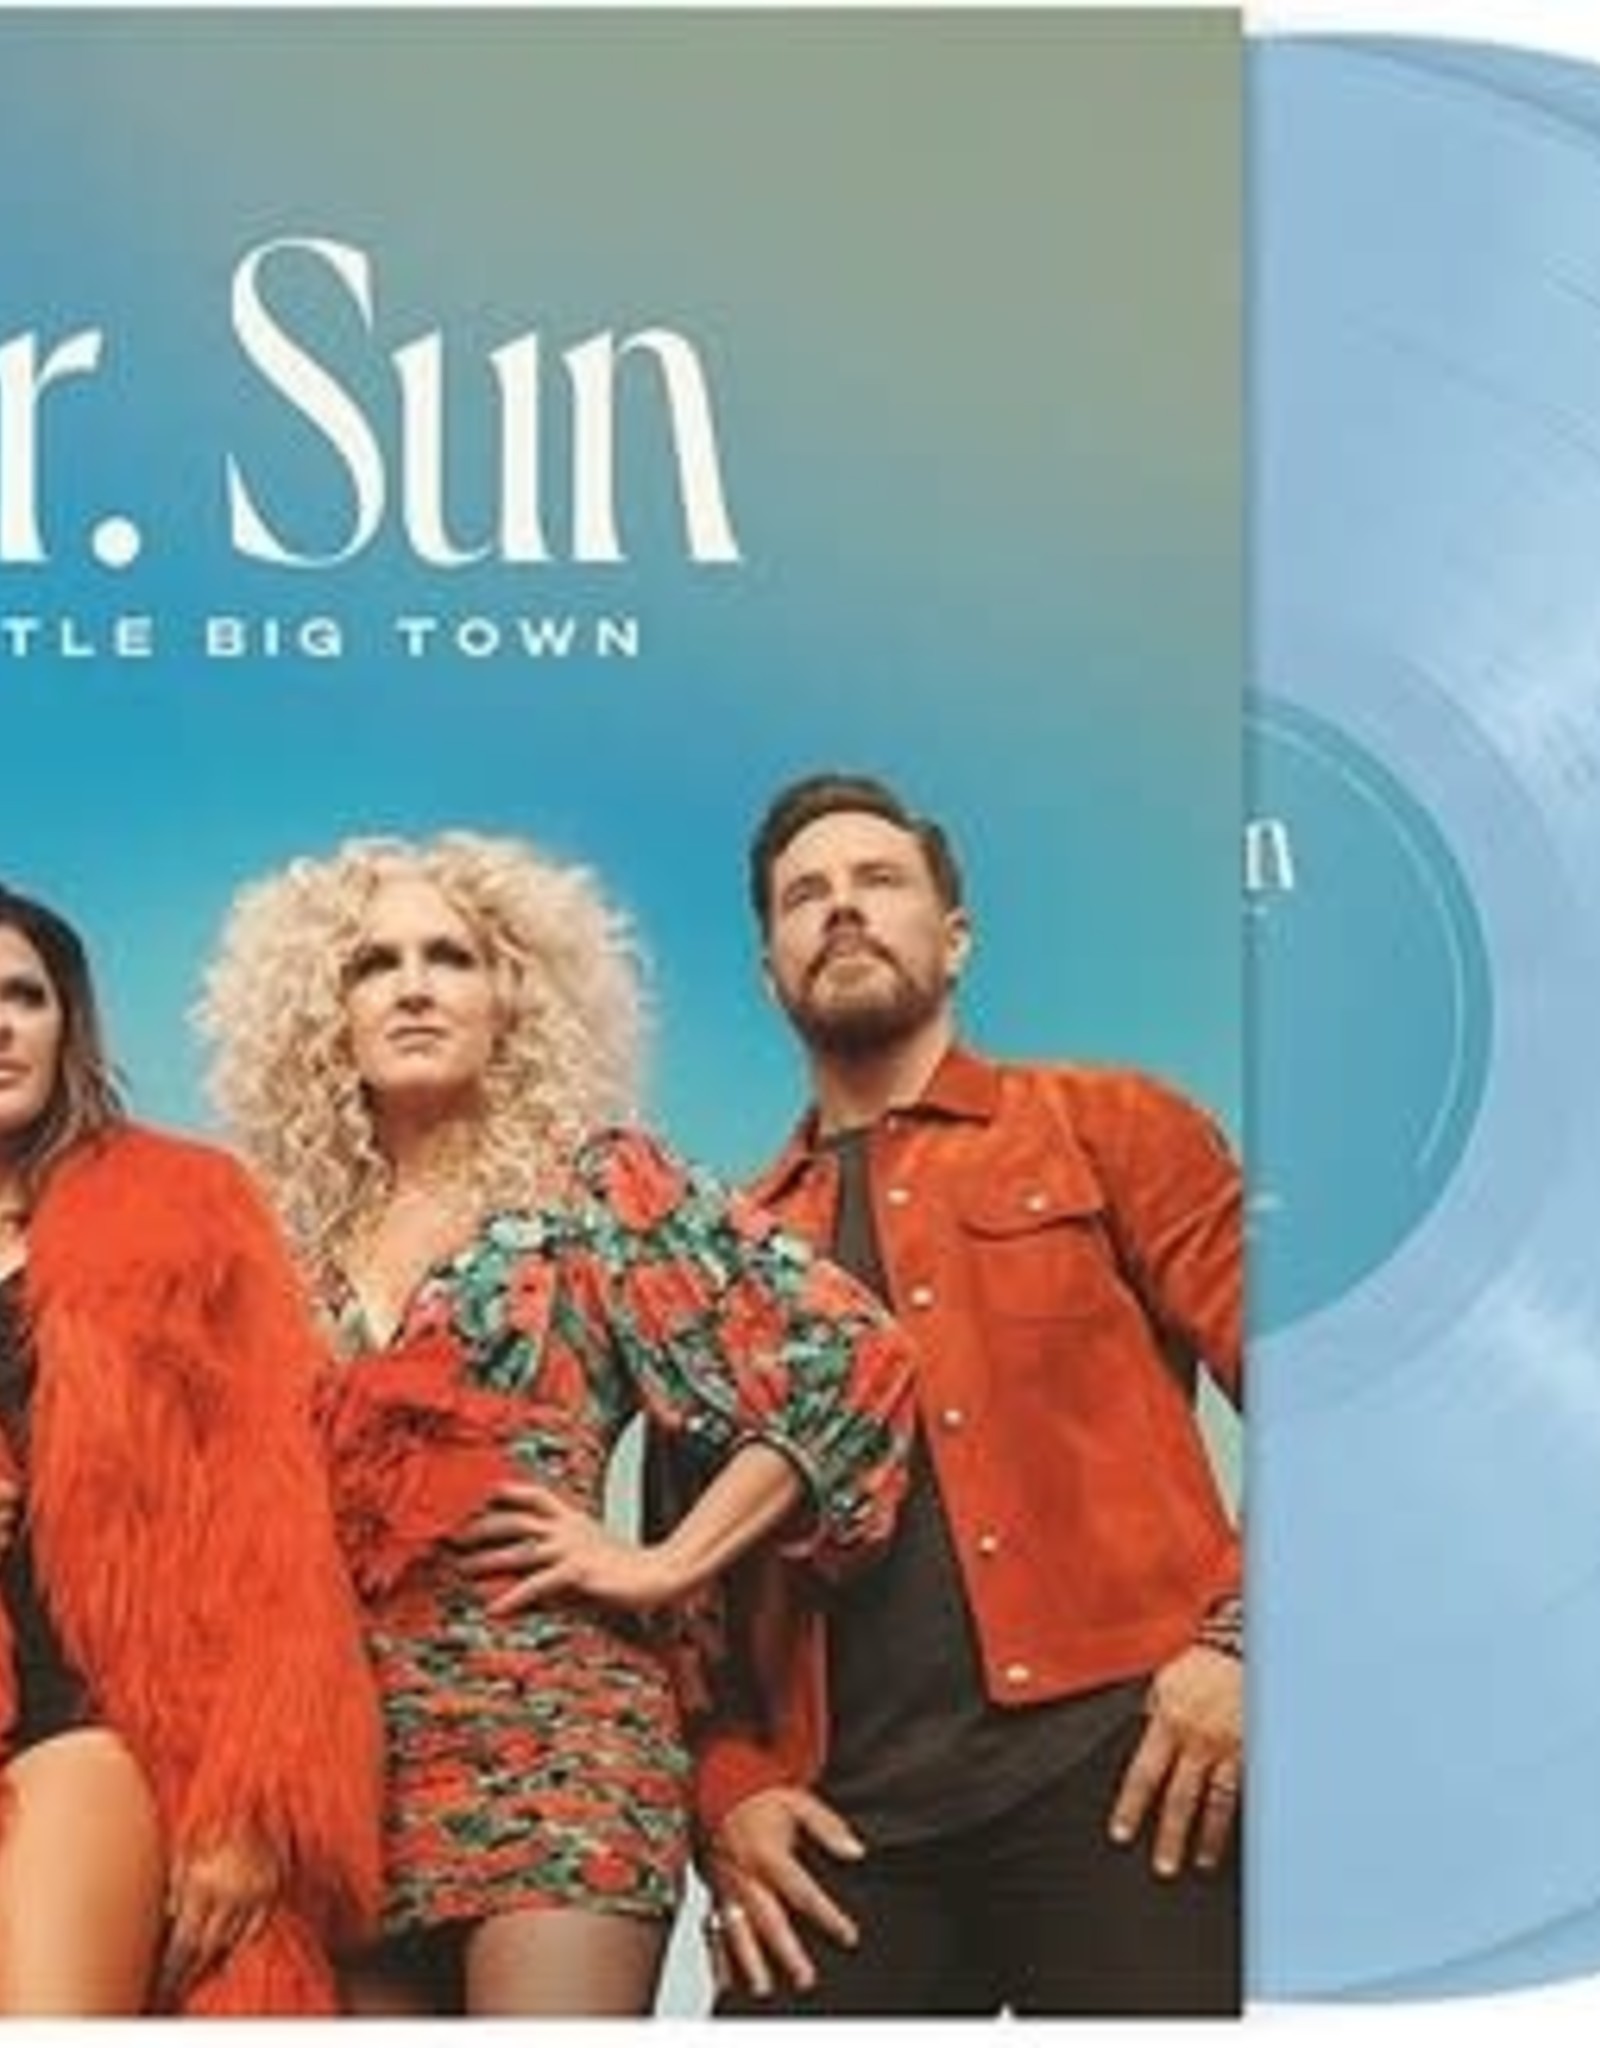 Little Big Town  - Mr Sun (Blue Vinyl)